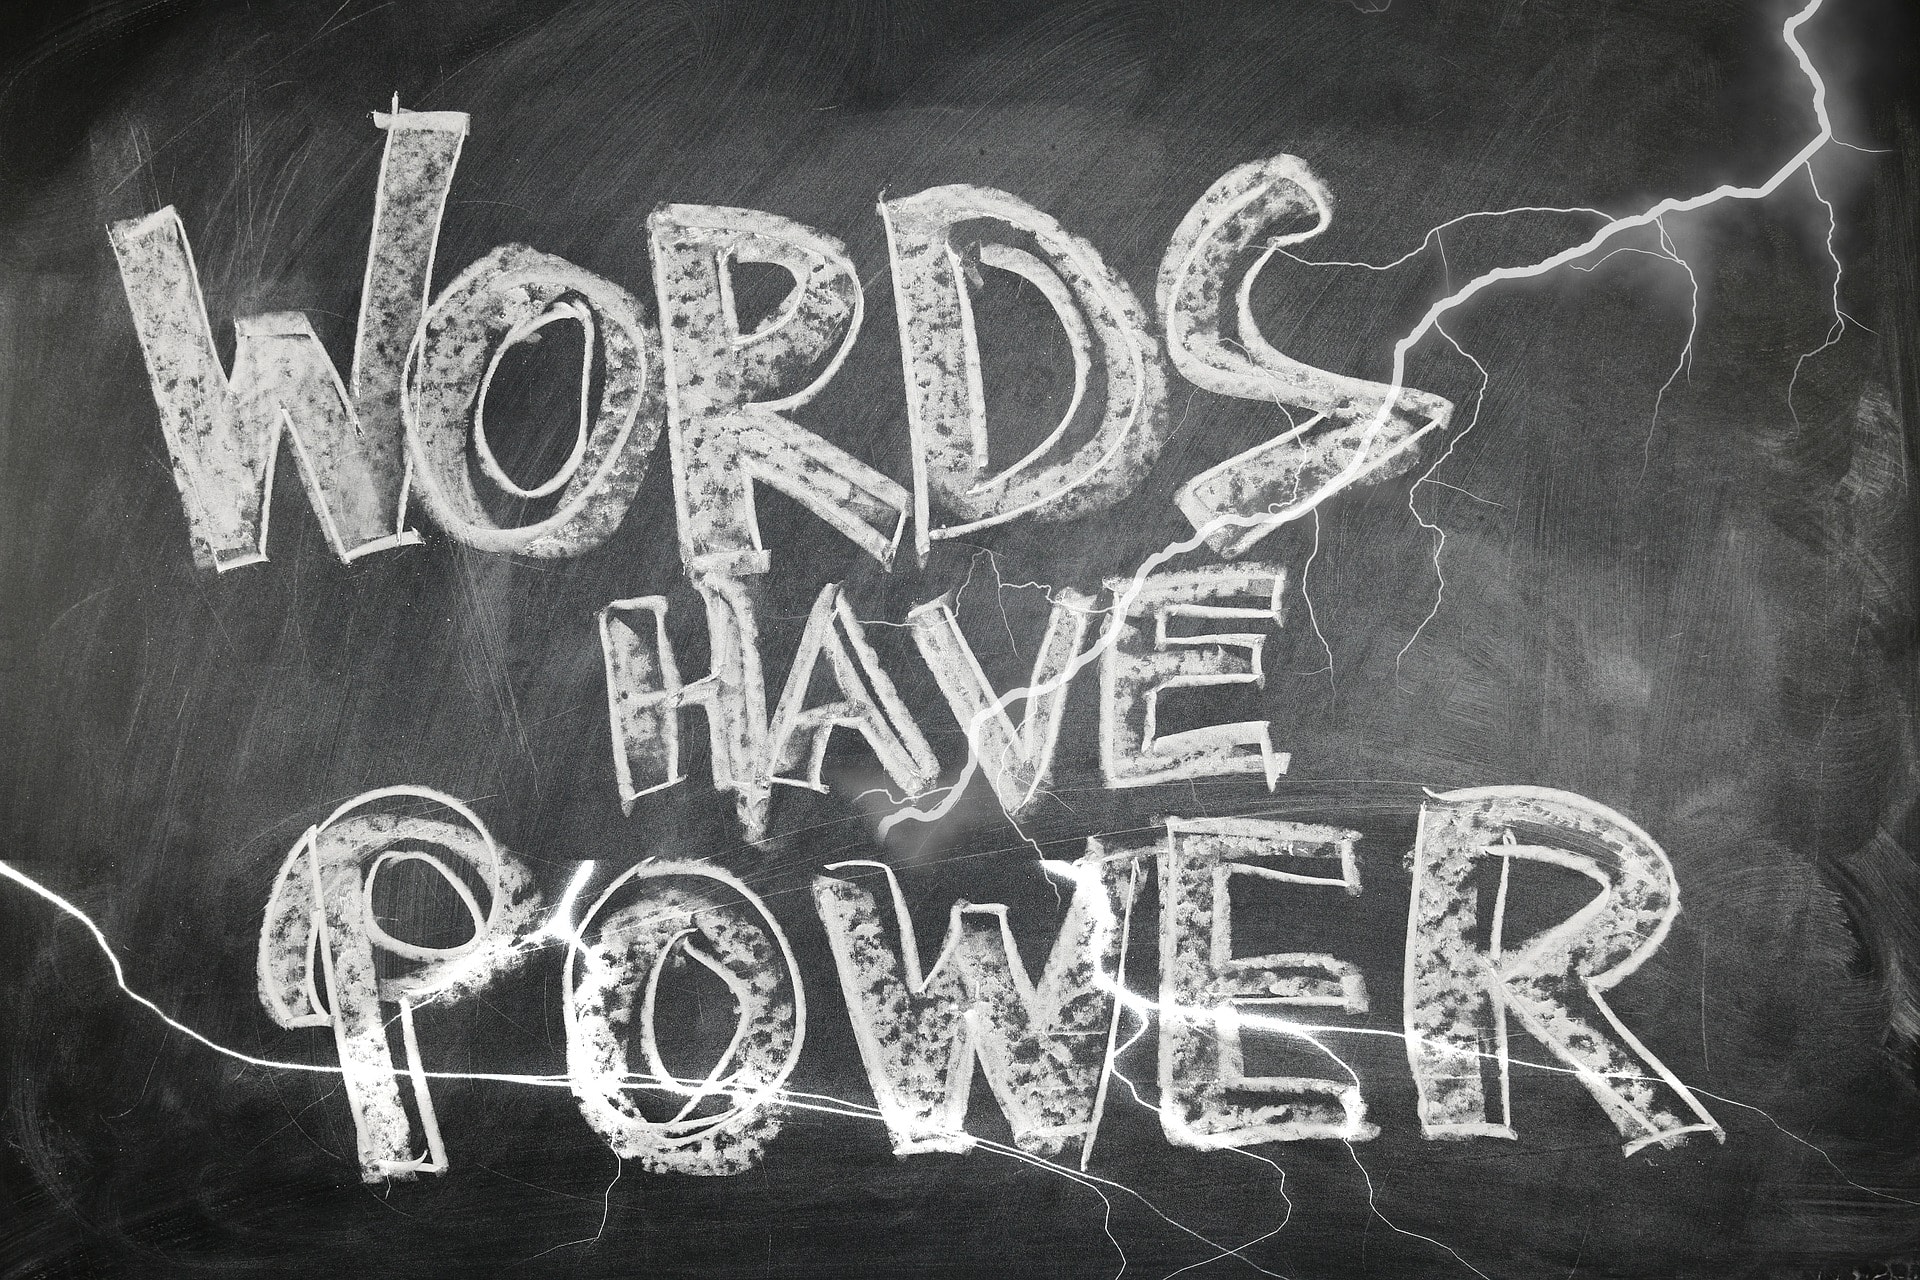 Verbal integrity: Words have power